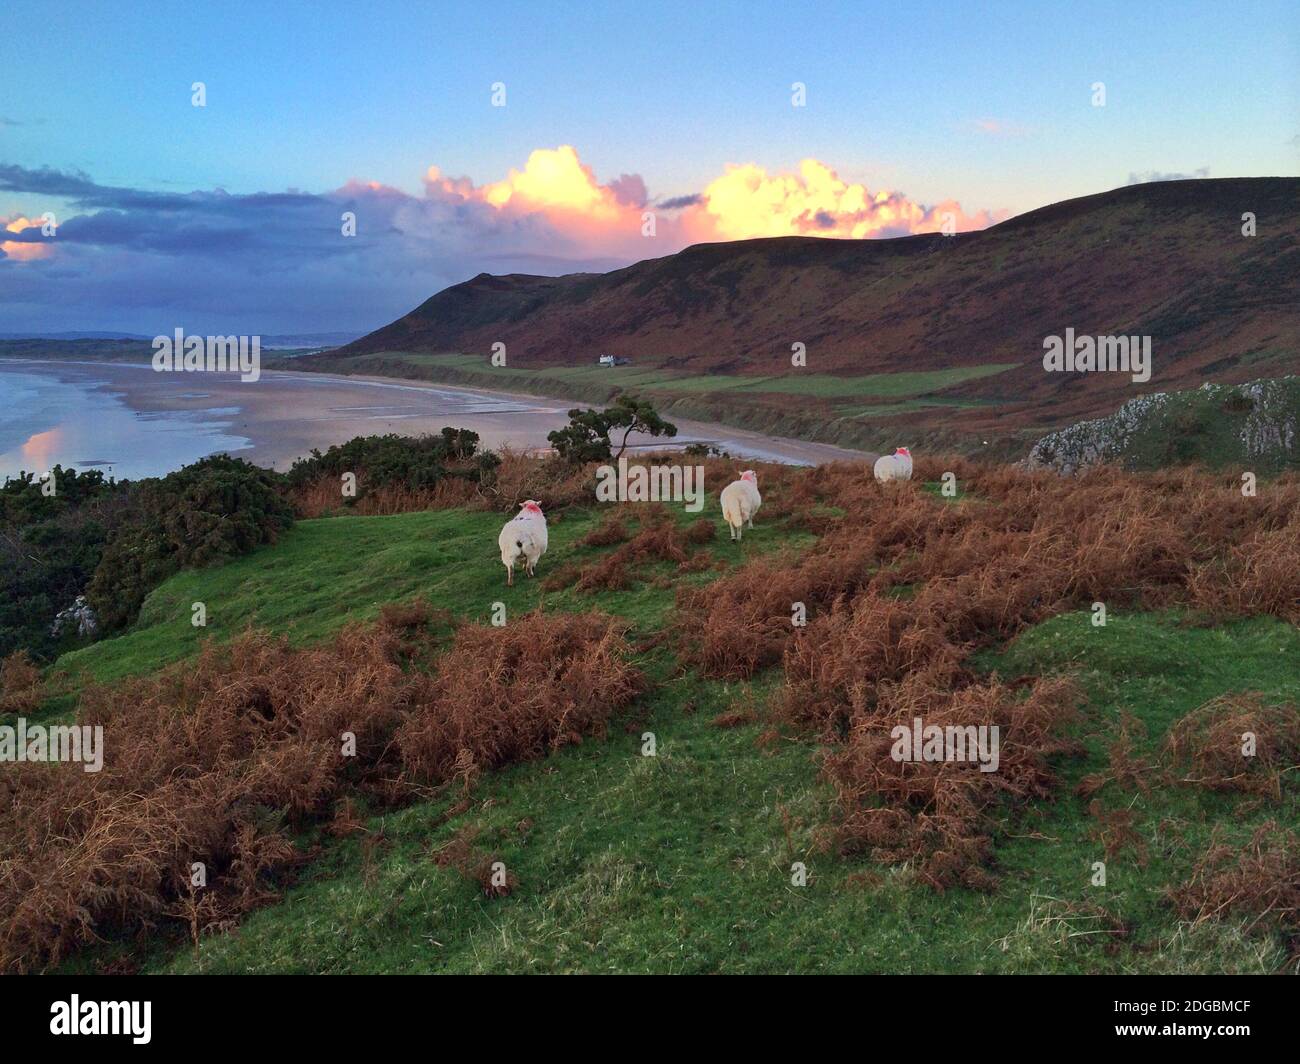 Sheep grazing on a cliff, Rhossili Bay, Gower Peninsula, Wales, UK Stock Photo